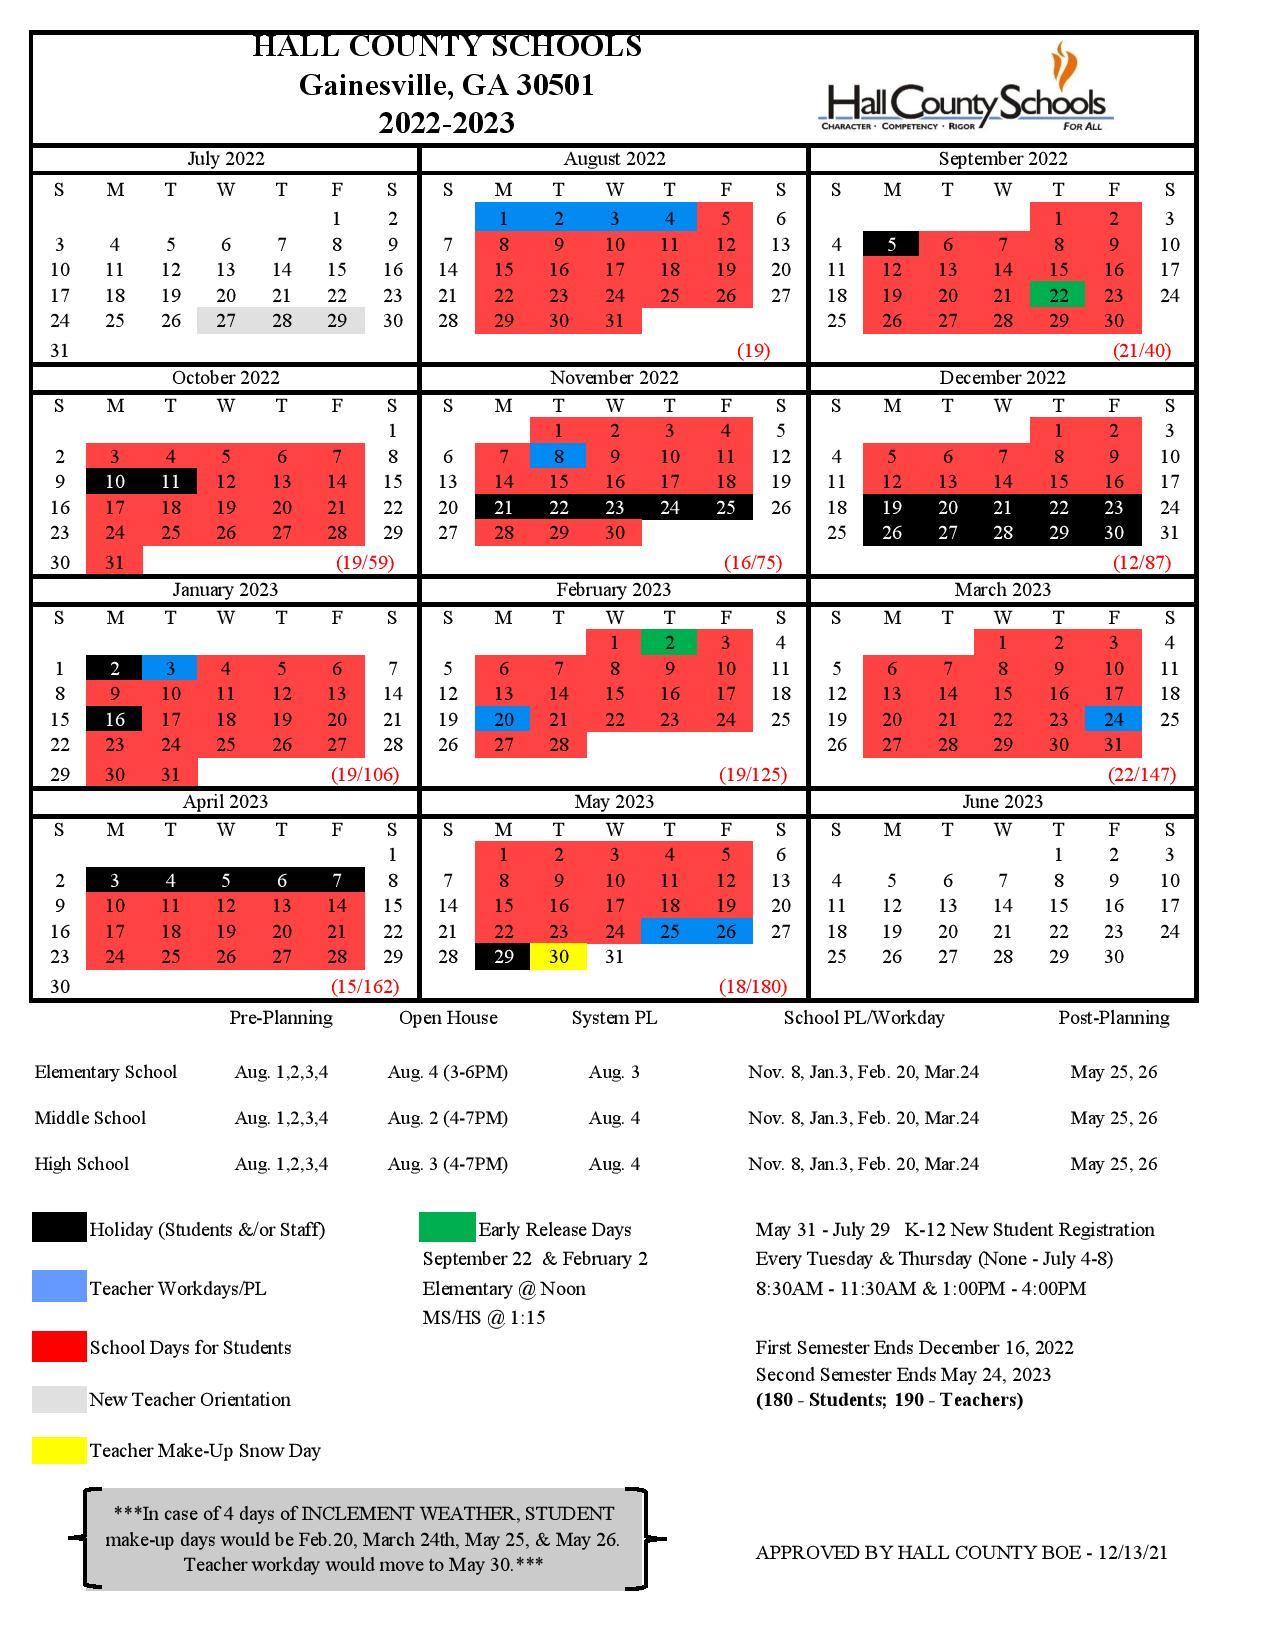 Hall County Schools Calendar 2022-2023 & Holidays